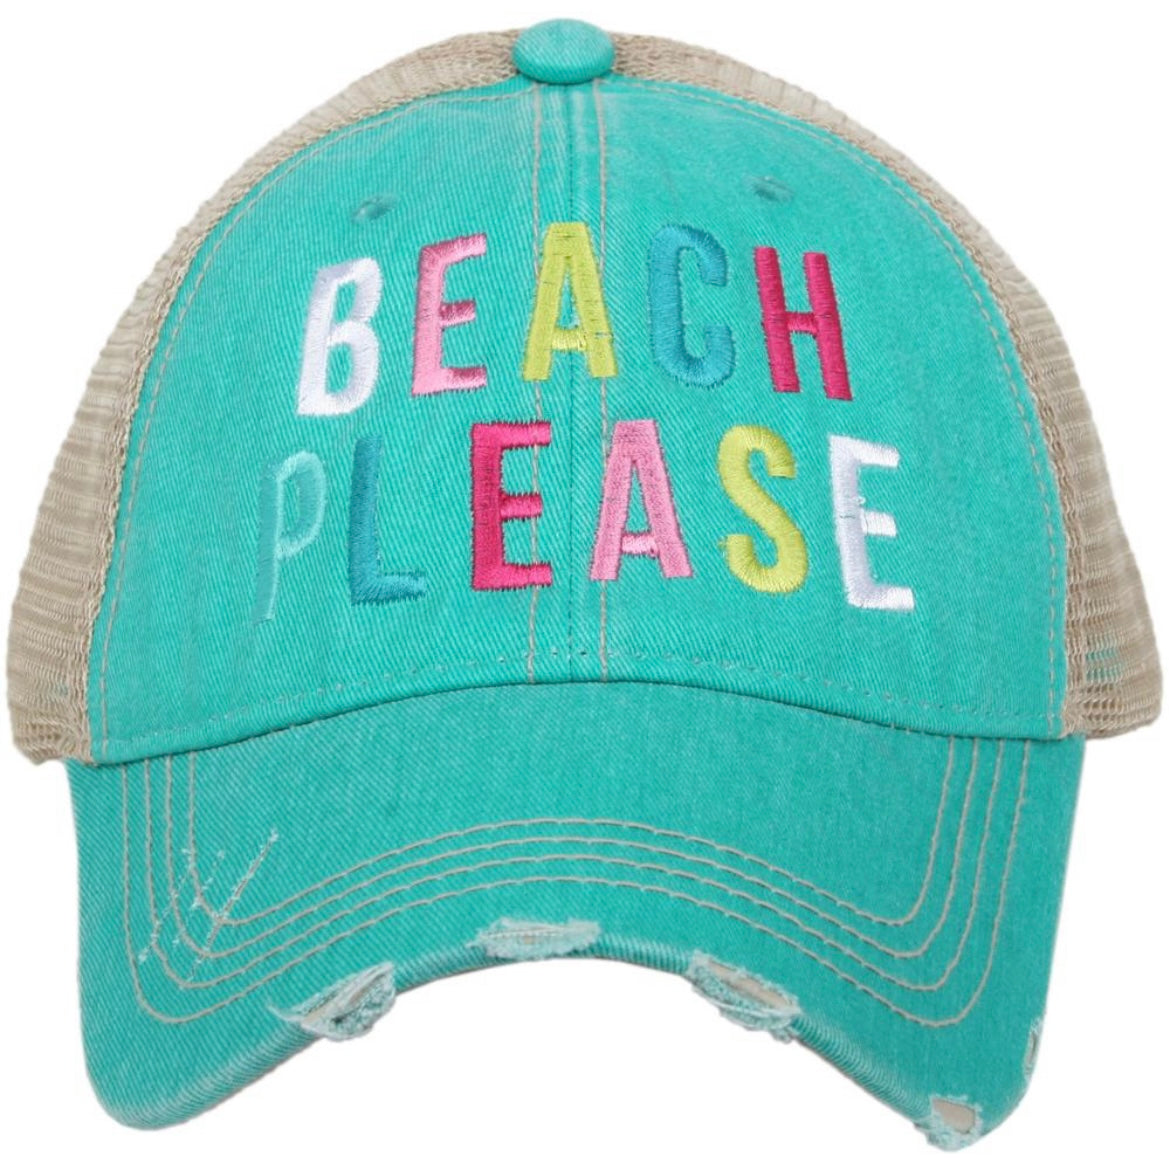 Beach Please Trucker Hat - Teal